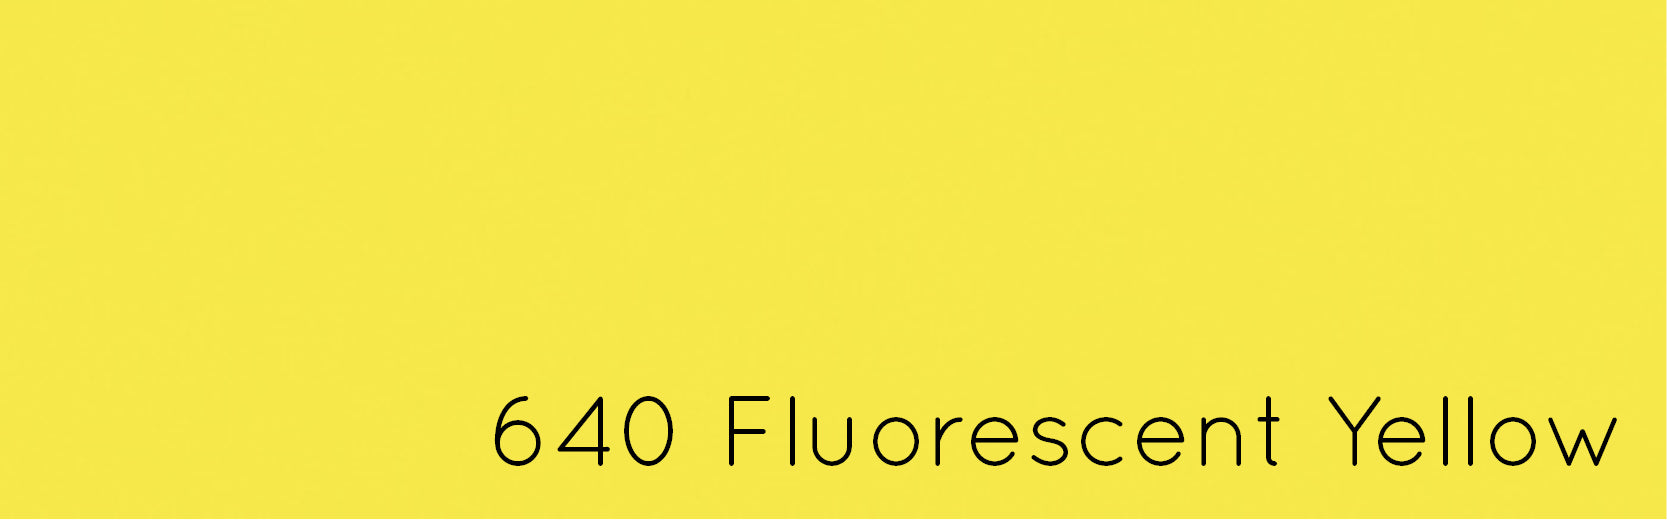 JAC4640 Fluorescent Yellow